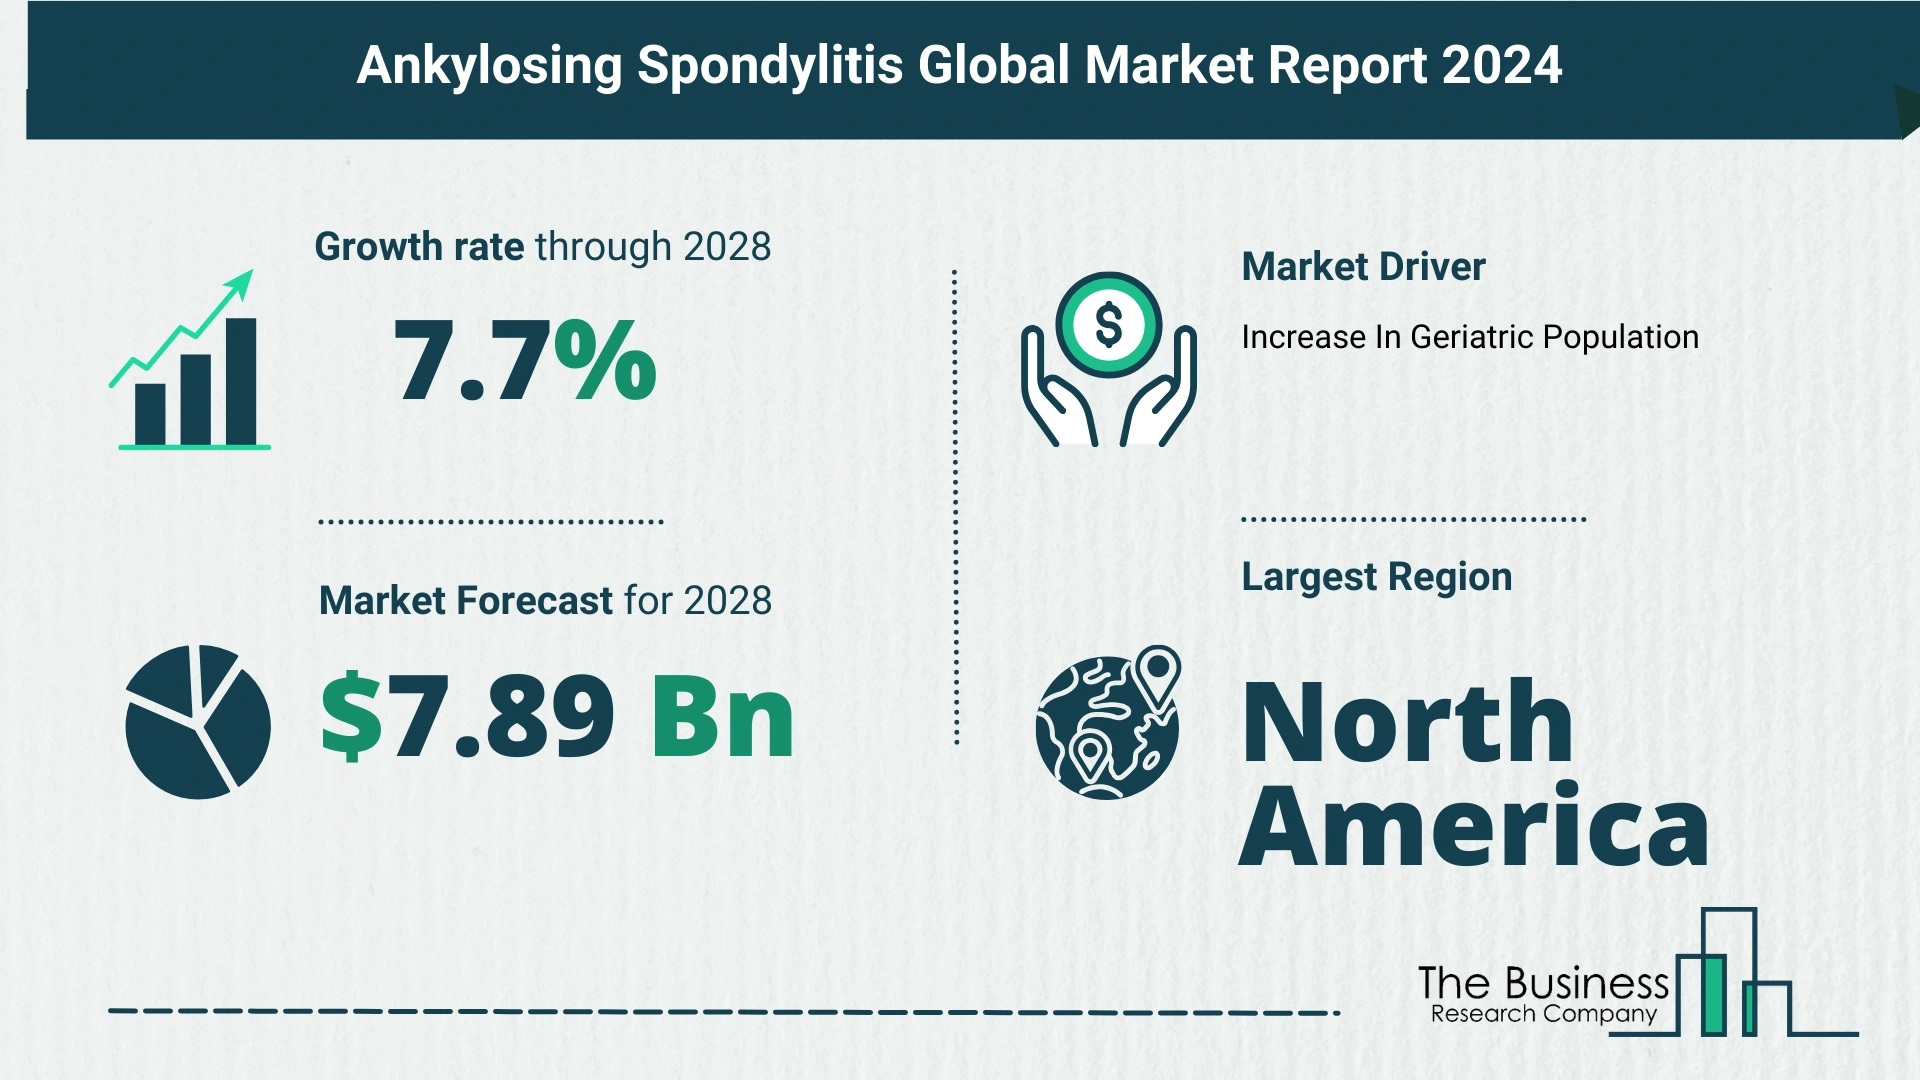 Global Ankylosing Spondylitis Market Trends